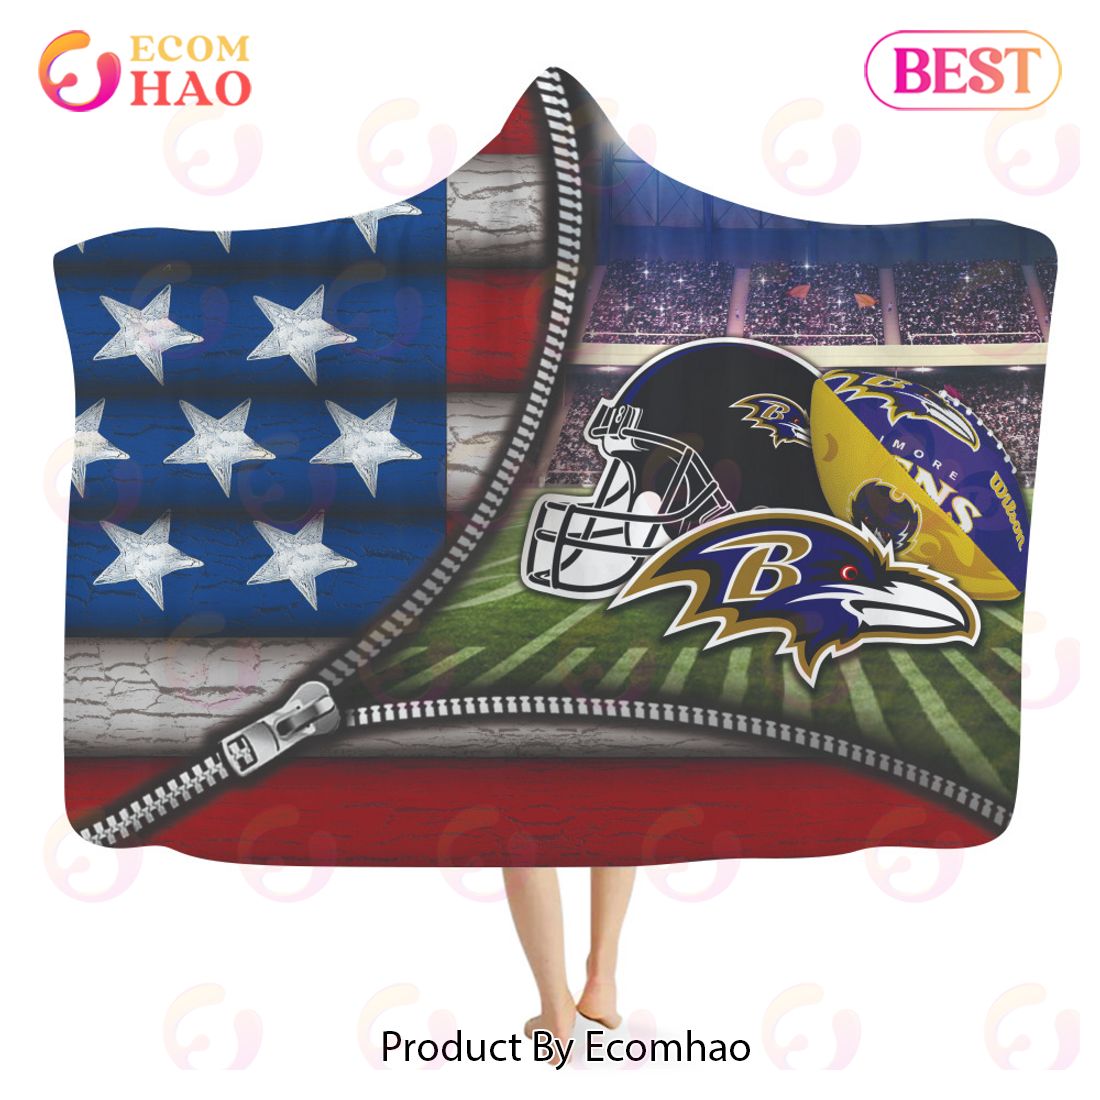 NFL Baltimore Ravens 3D Hooded Blanket American